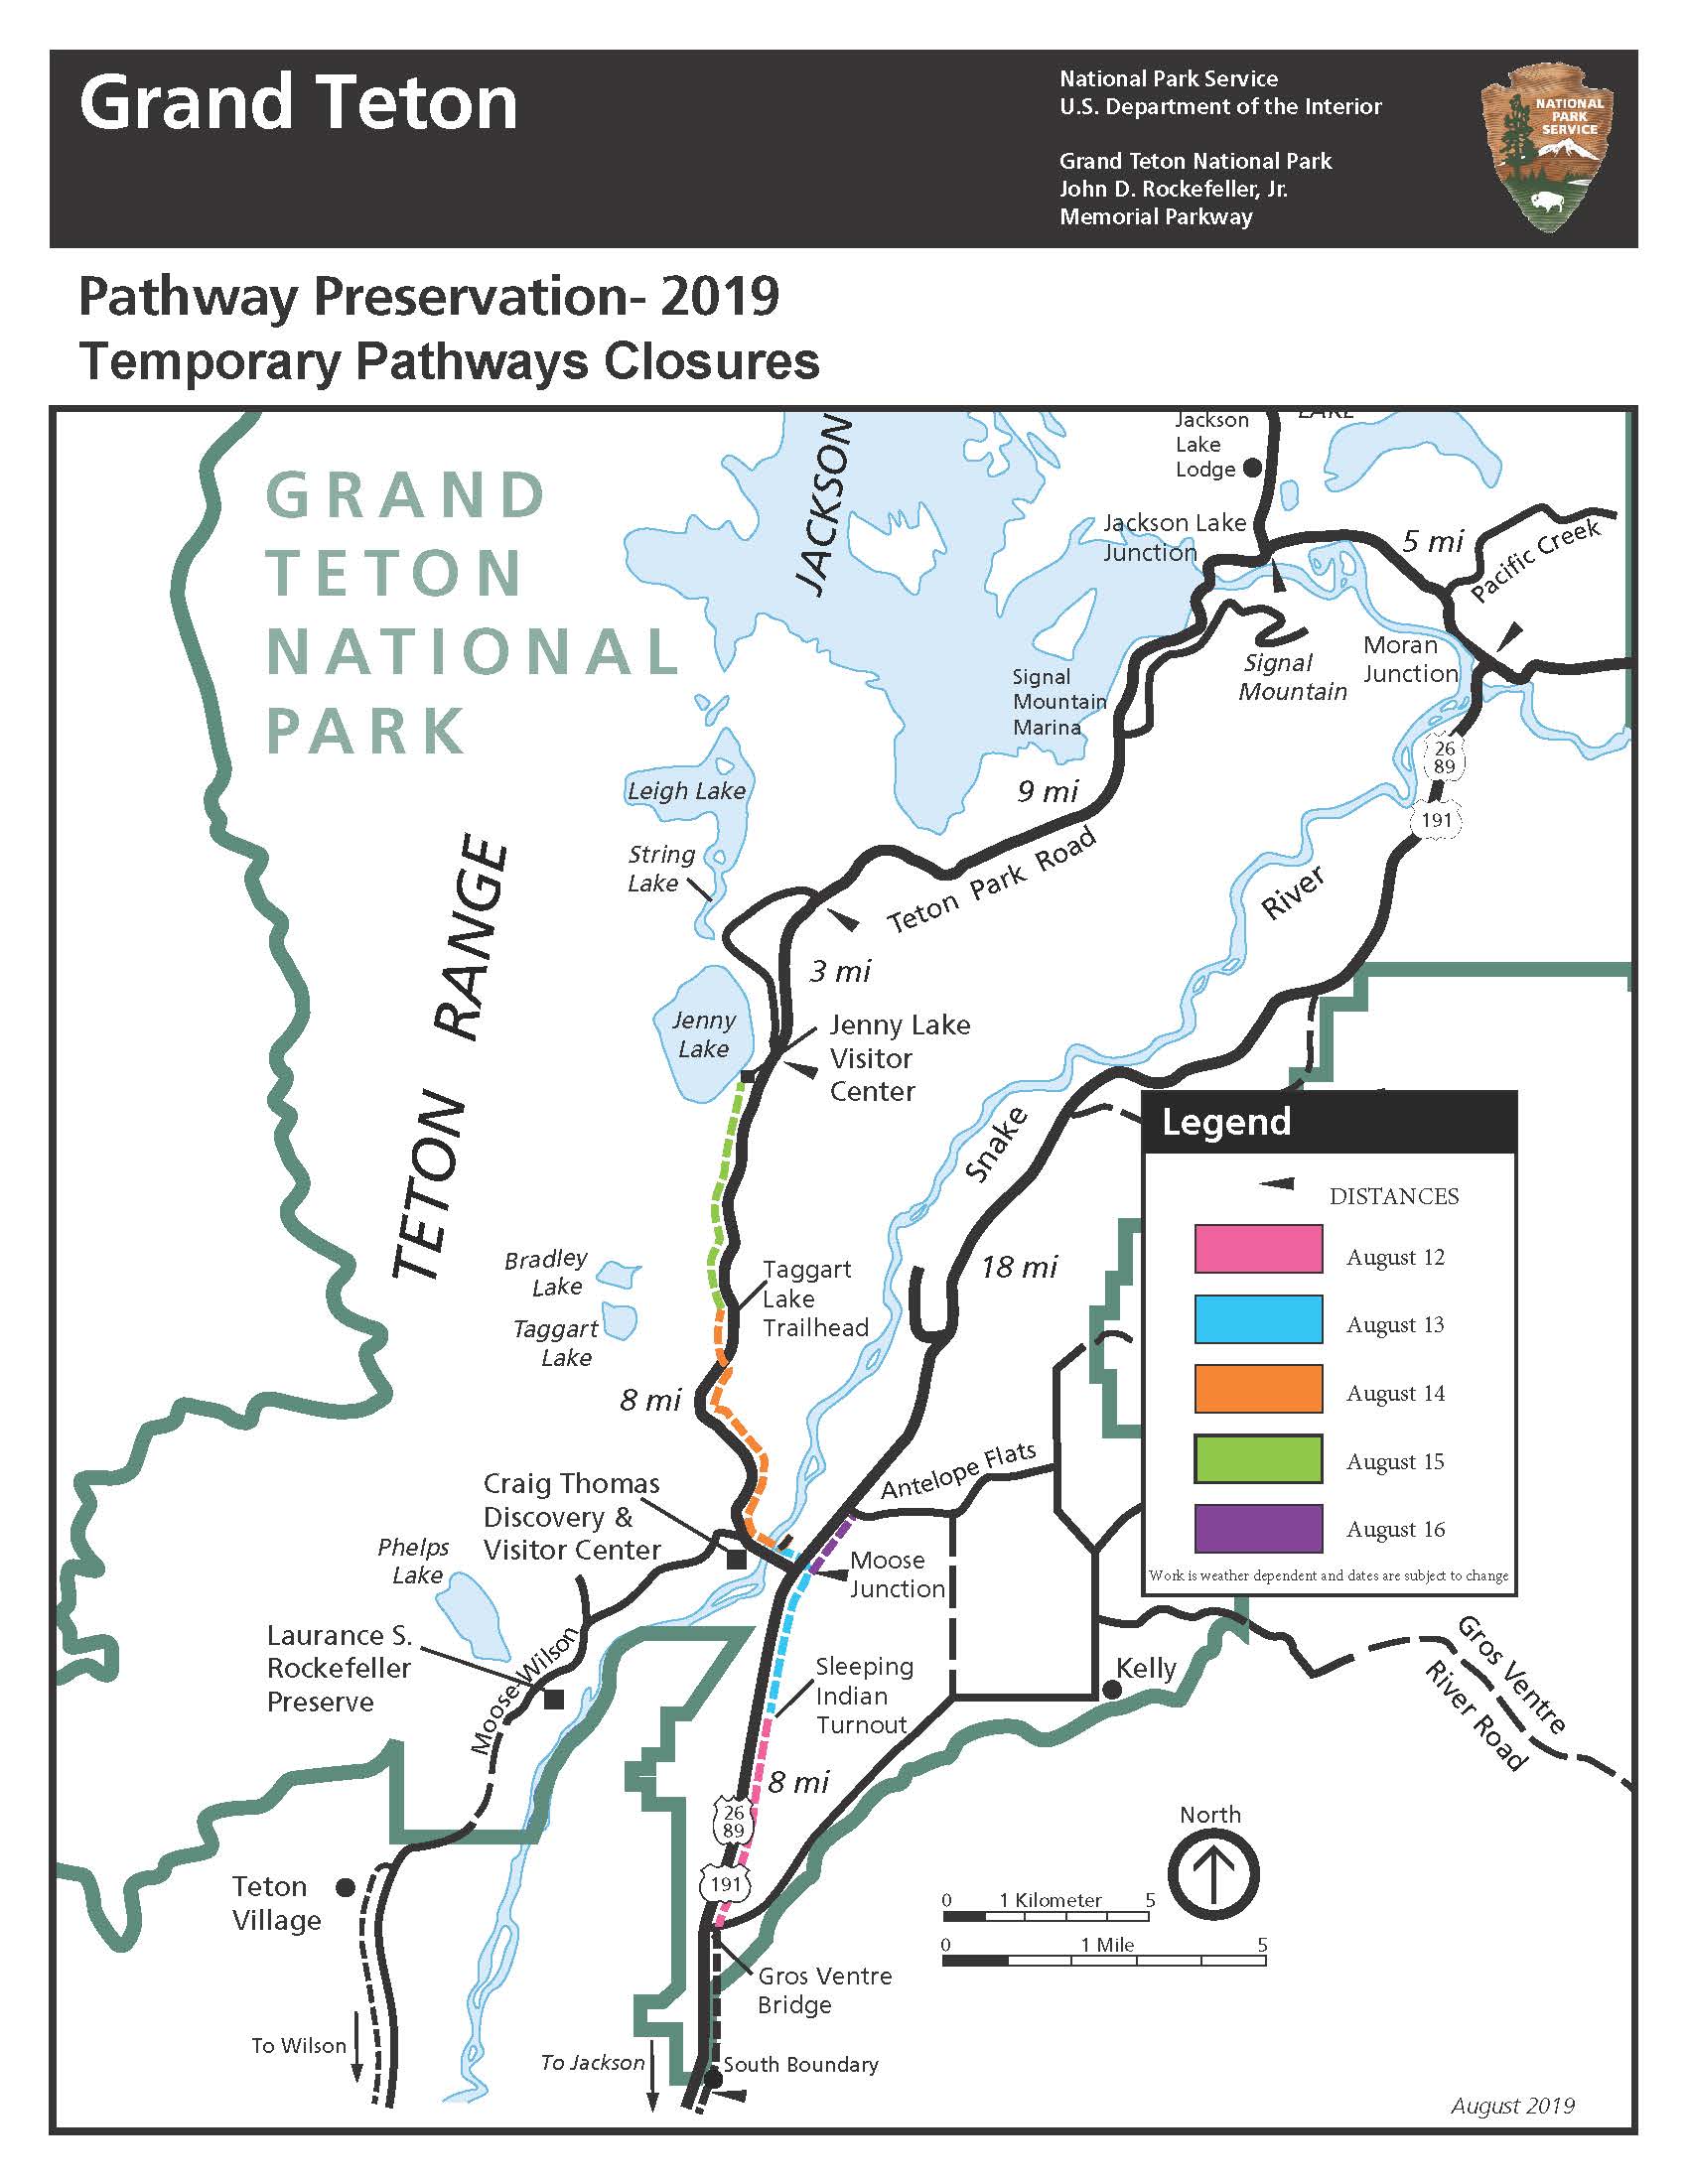 Park pathways map highlighting pathways closures Aug 12-16.